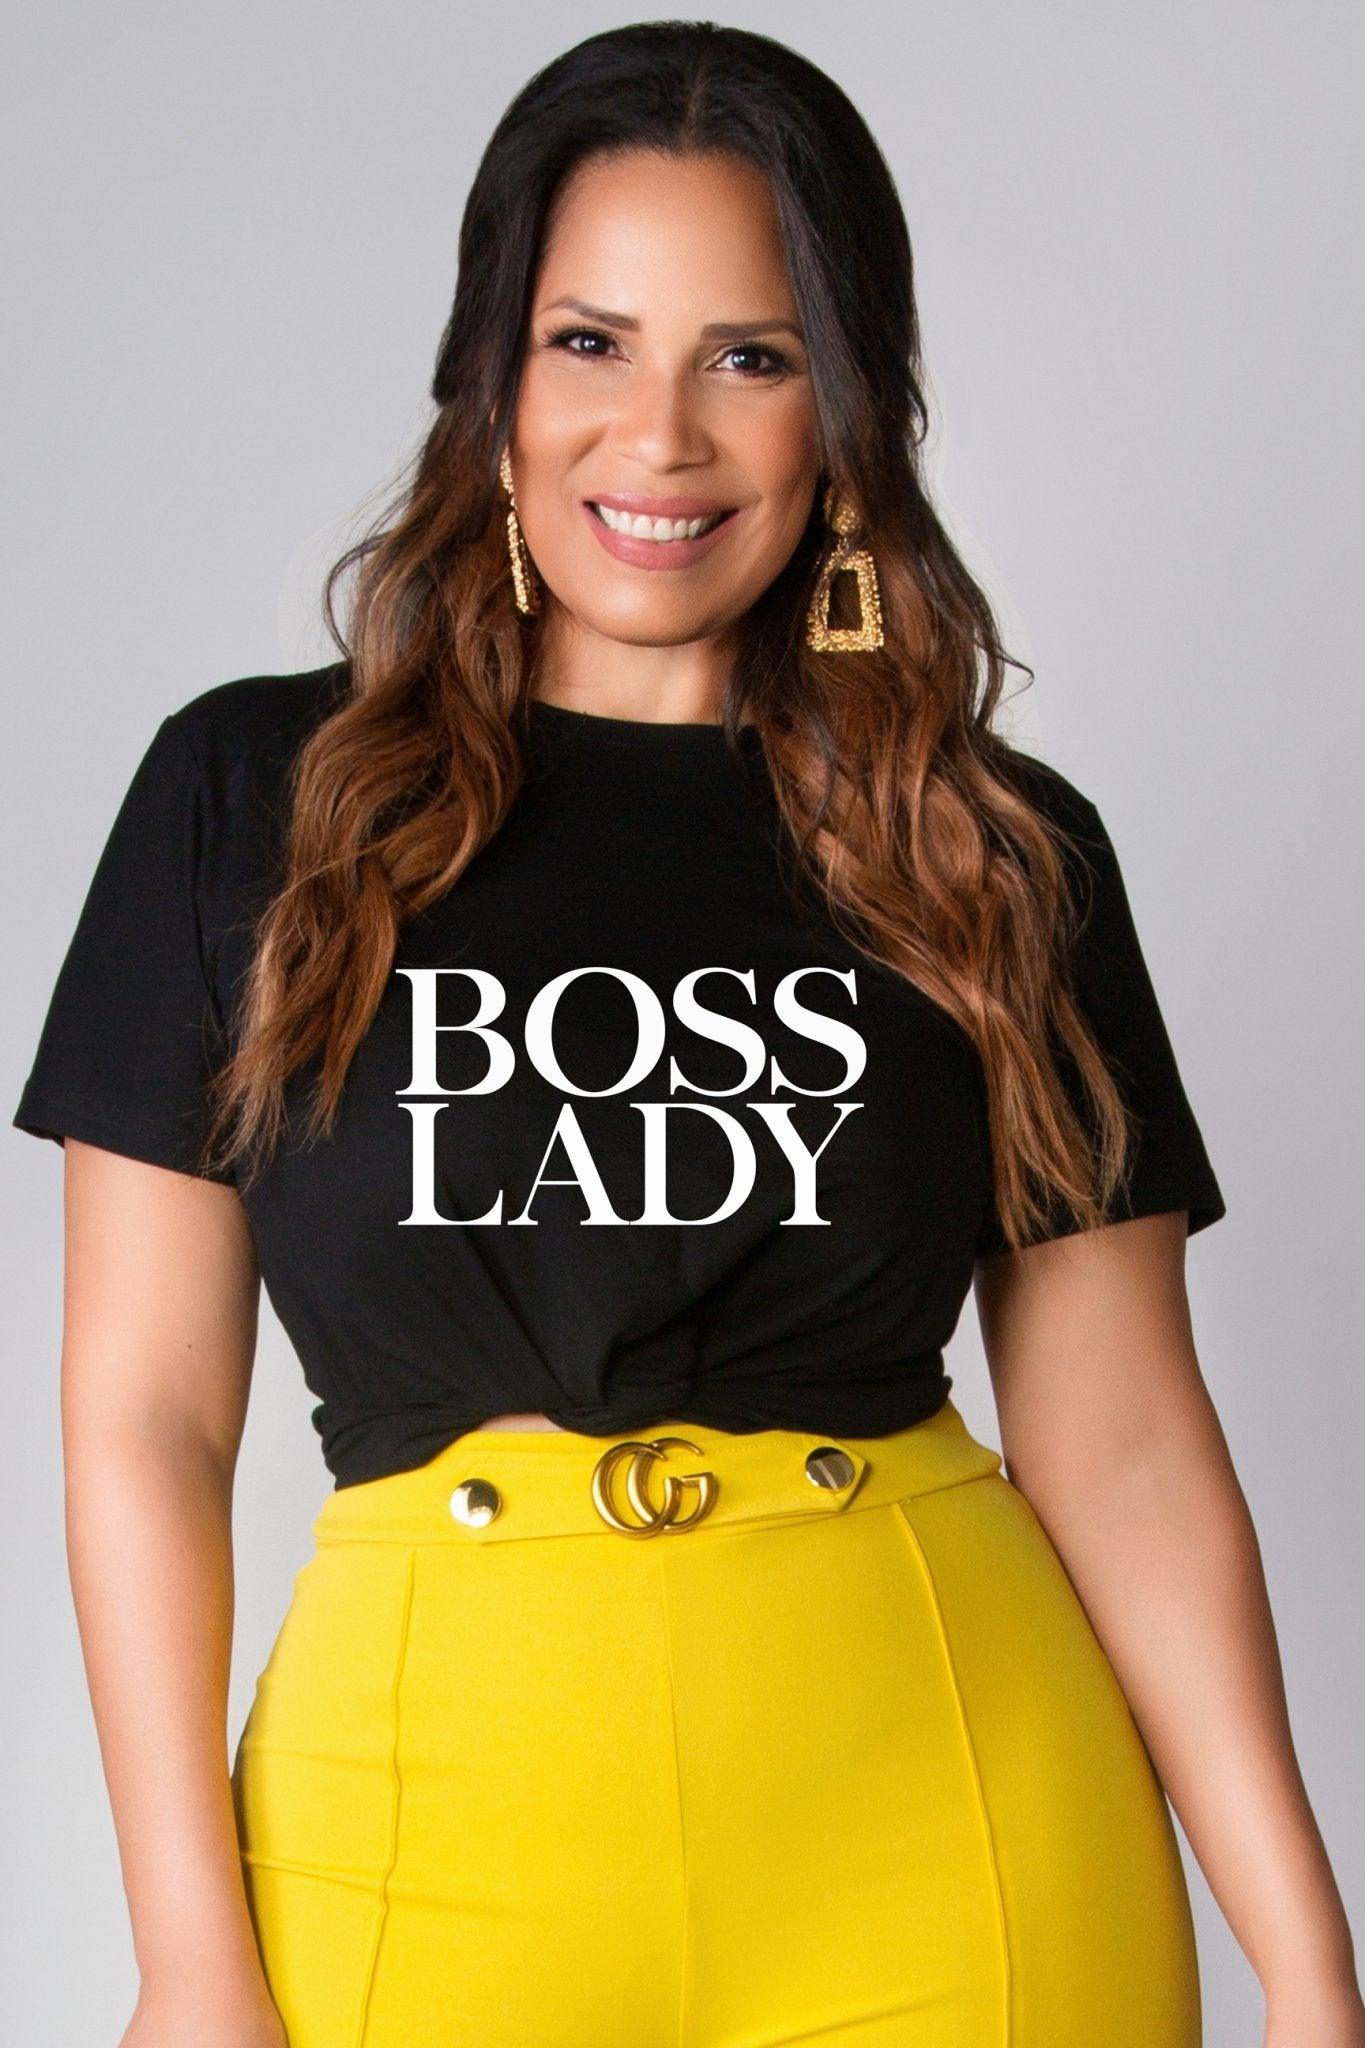 Boss Lady Short-Sleeve Unisex T-Shirt - MY SEXY STYLES